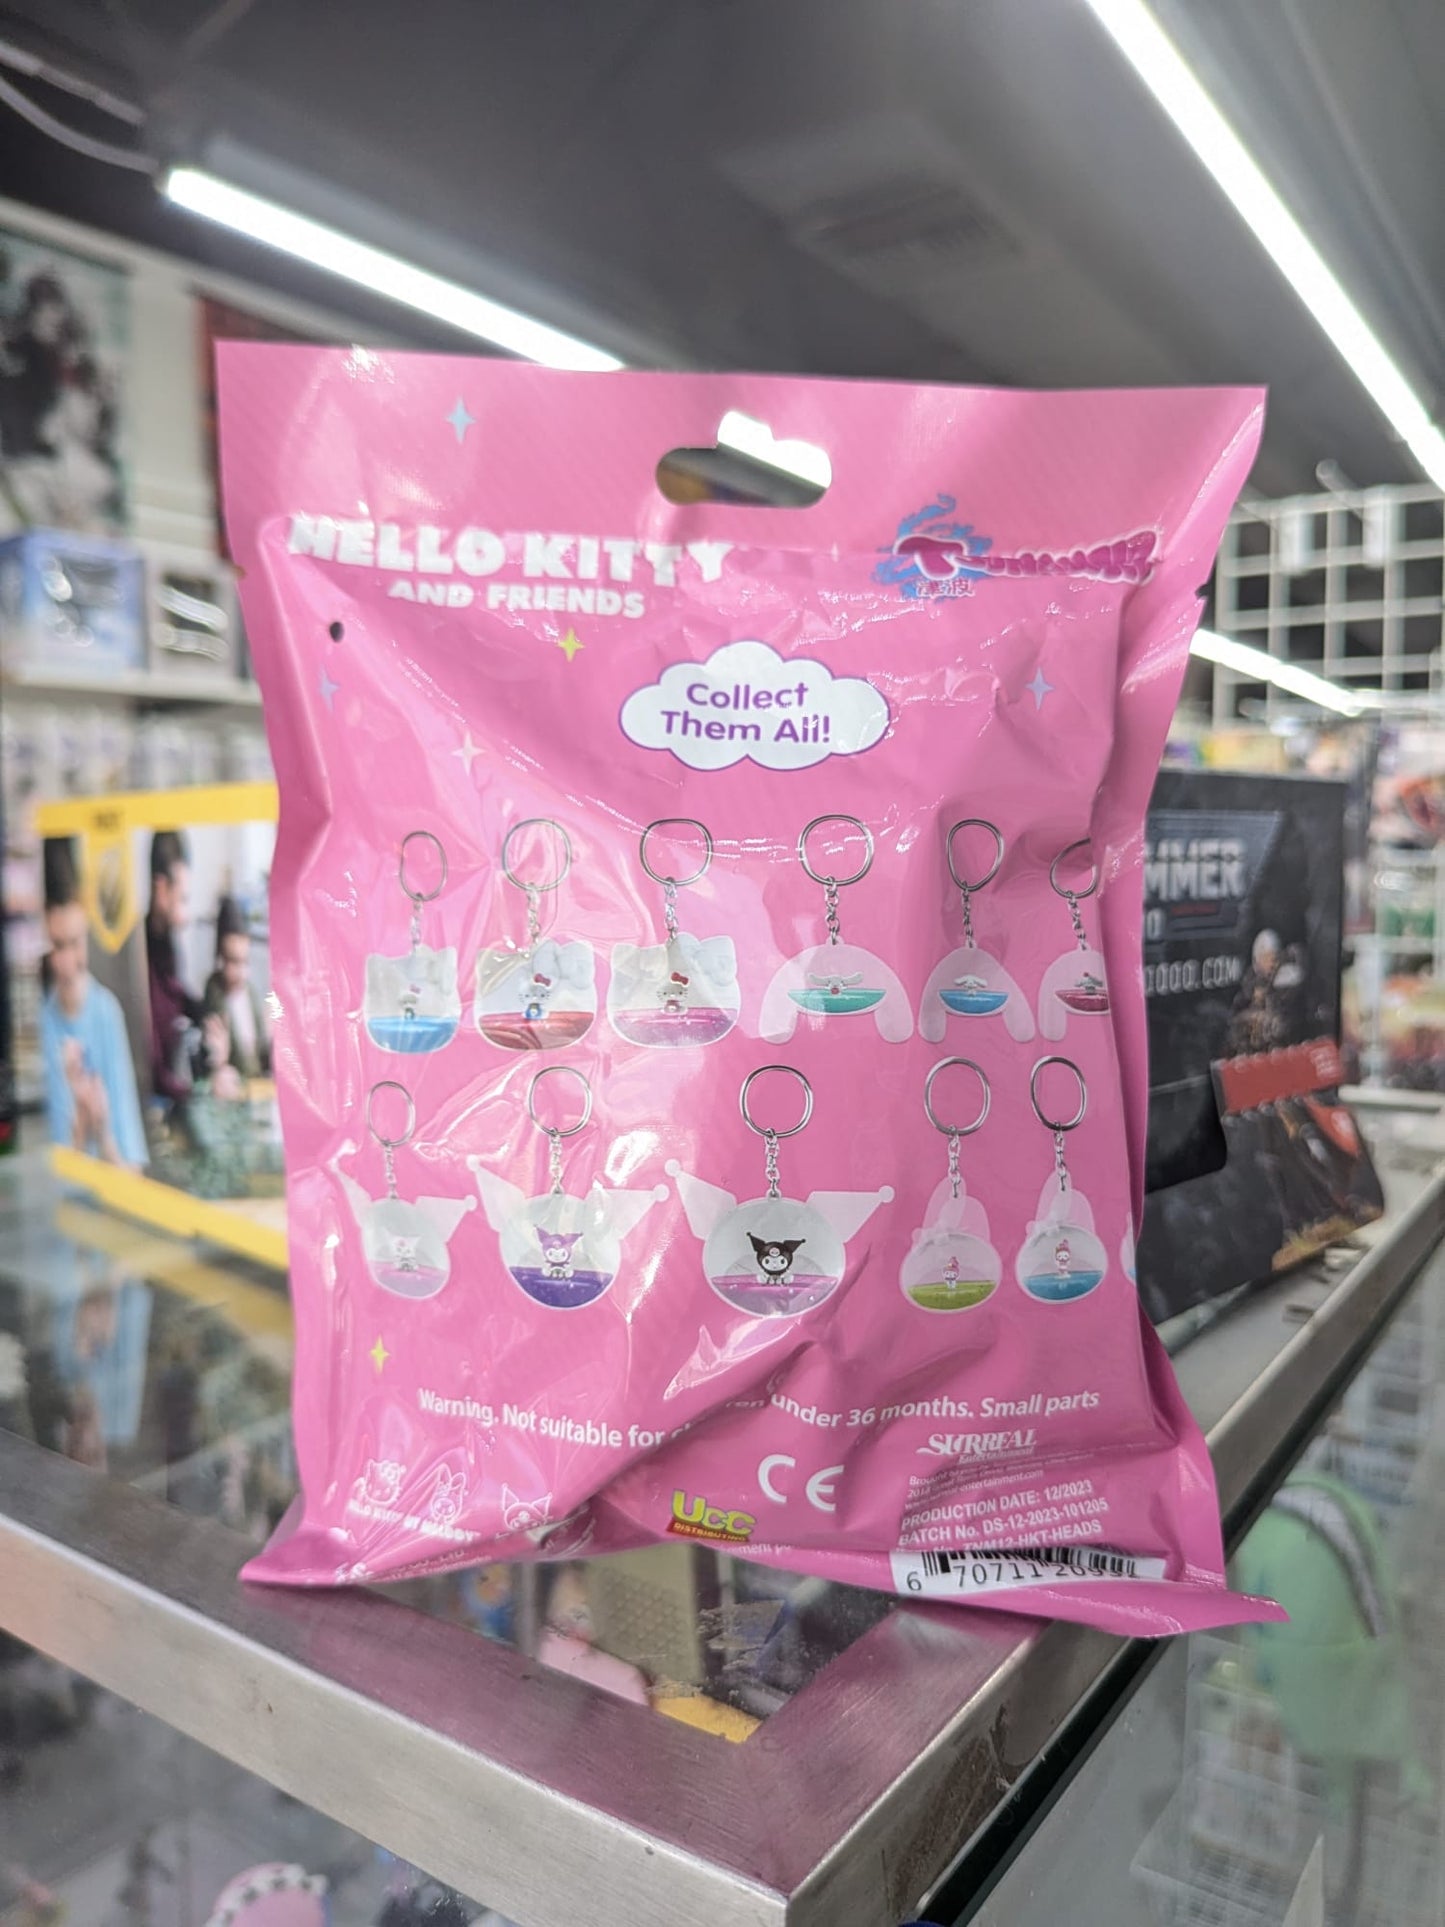 Hello Kitty and Friends Tsunameez™ Keychain Blind Bag [1 Blind Box]